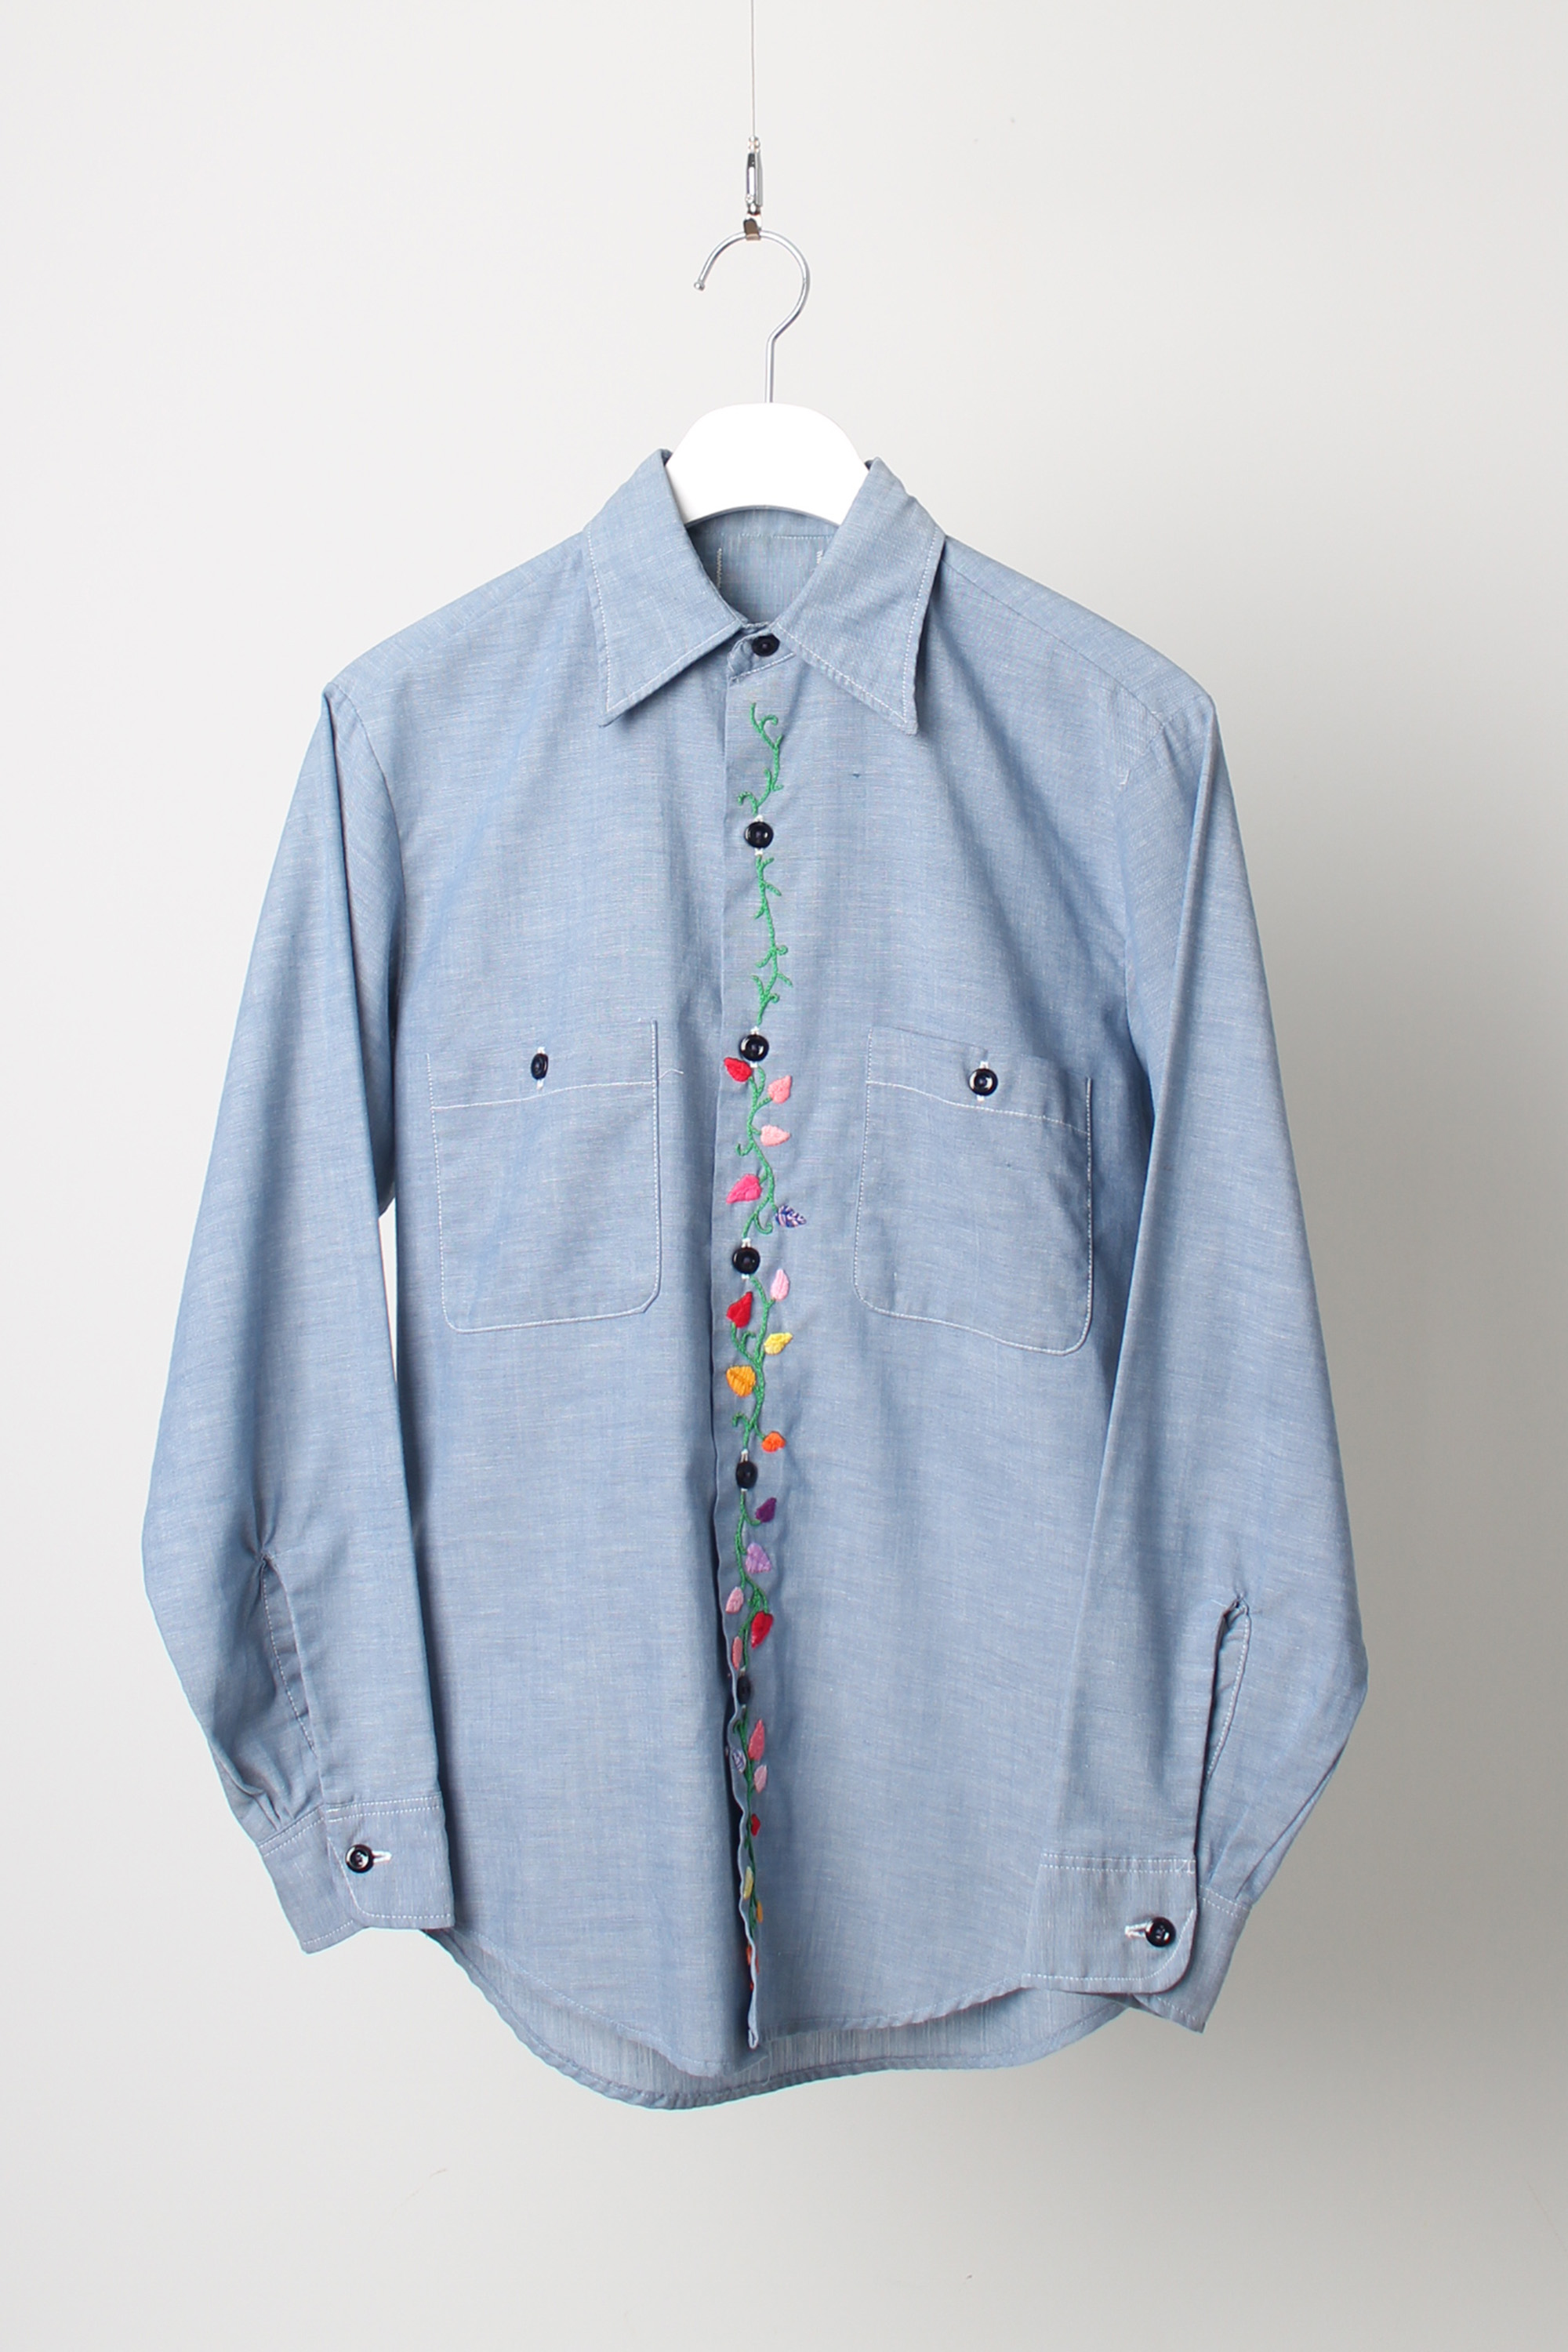 vintage embroidered shirt